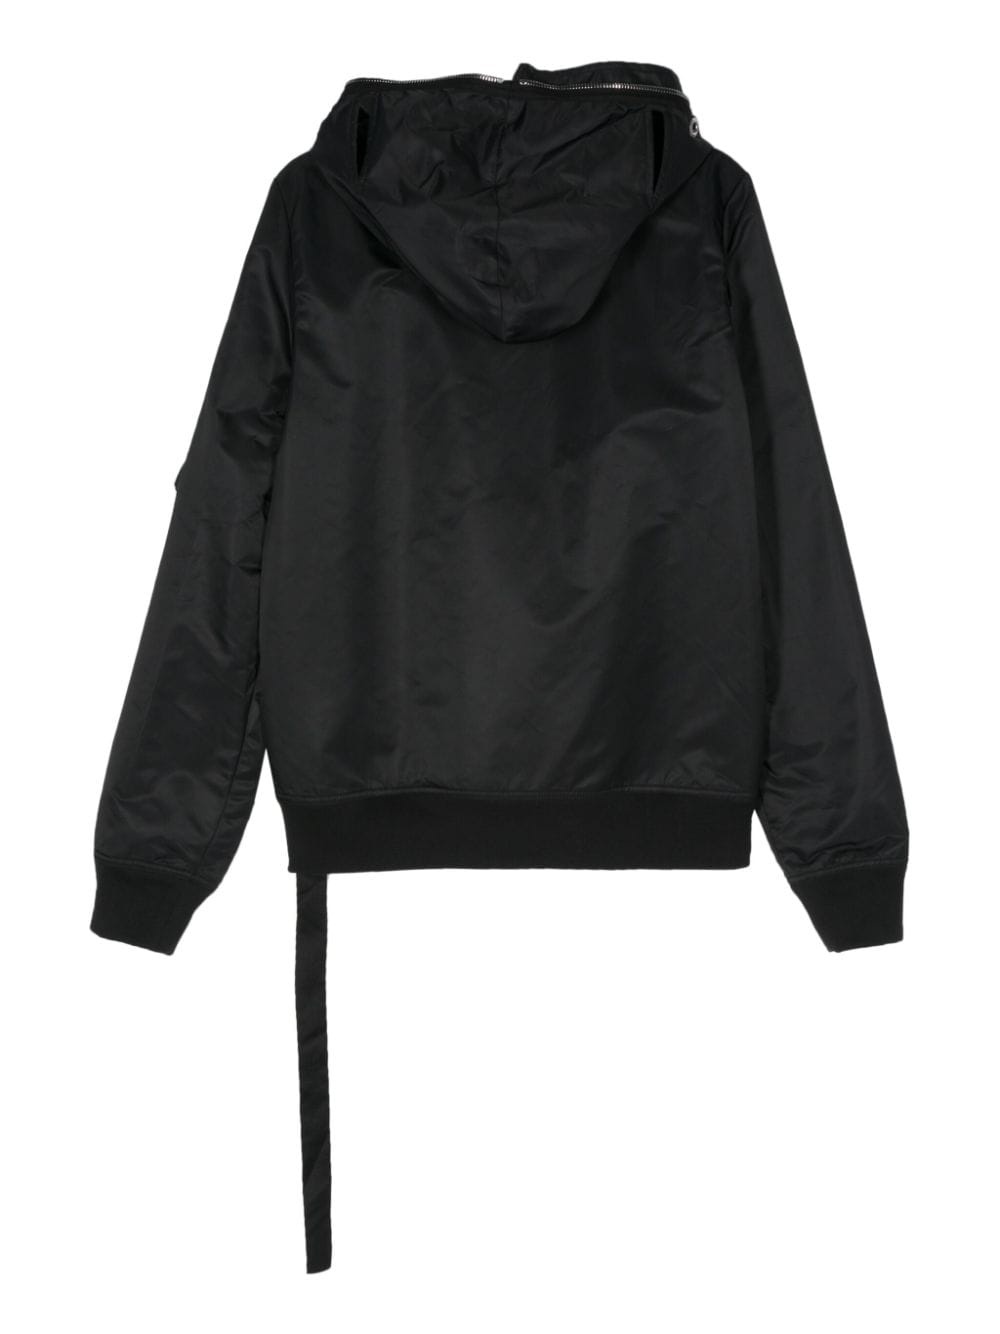 eyelet-detail hooded jacket - 2